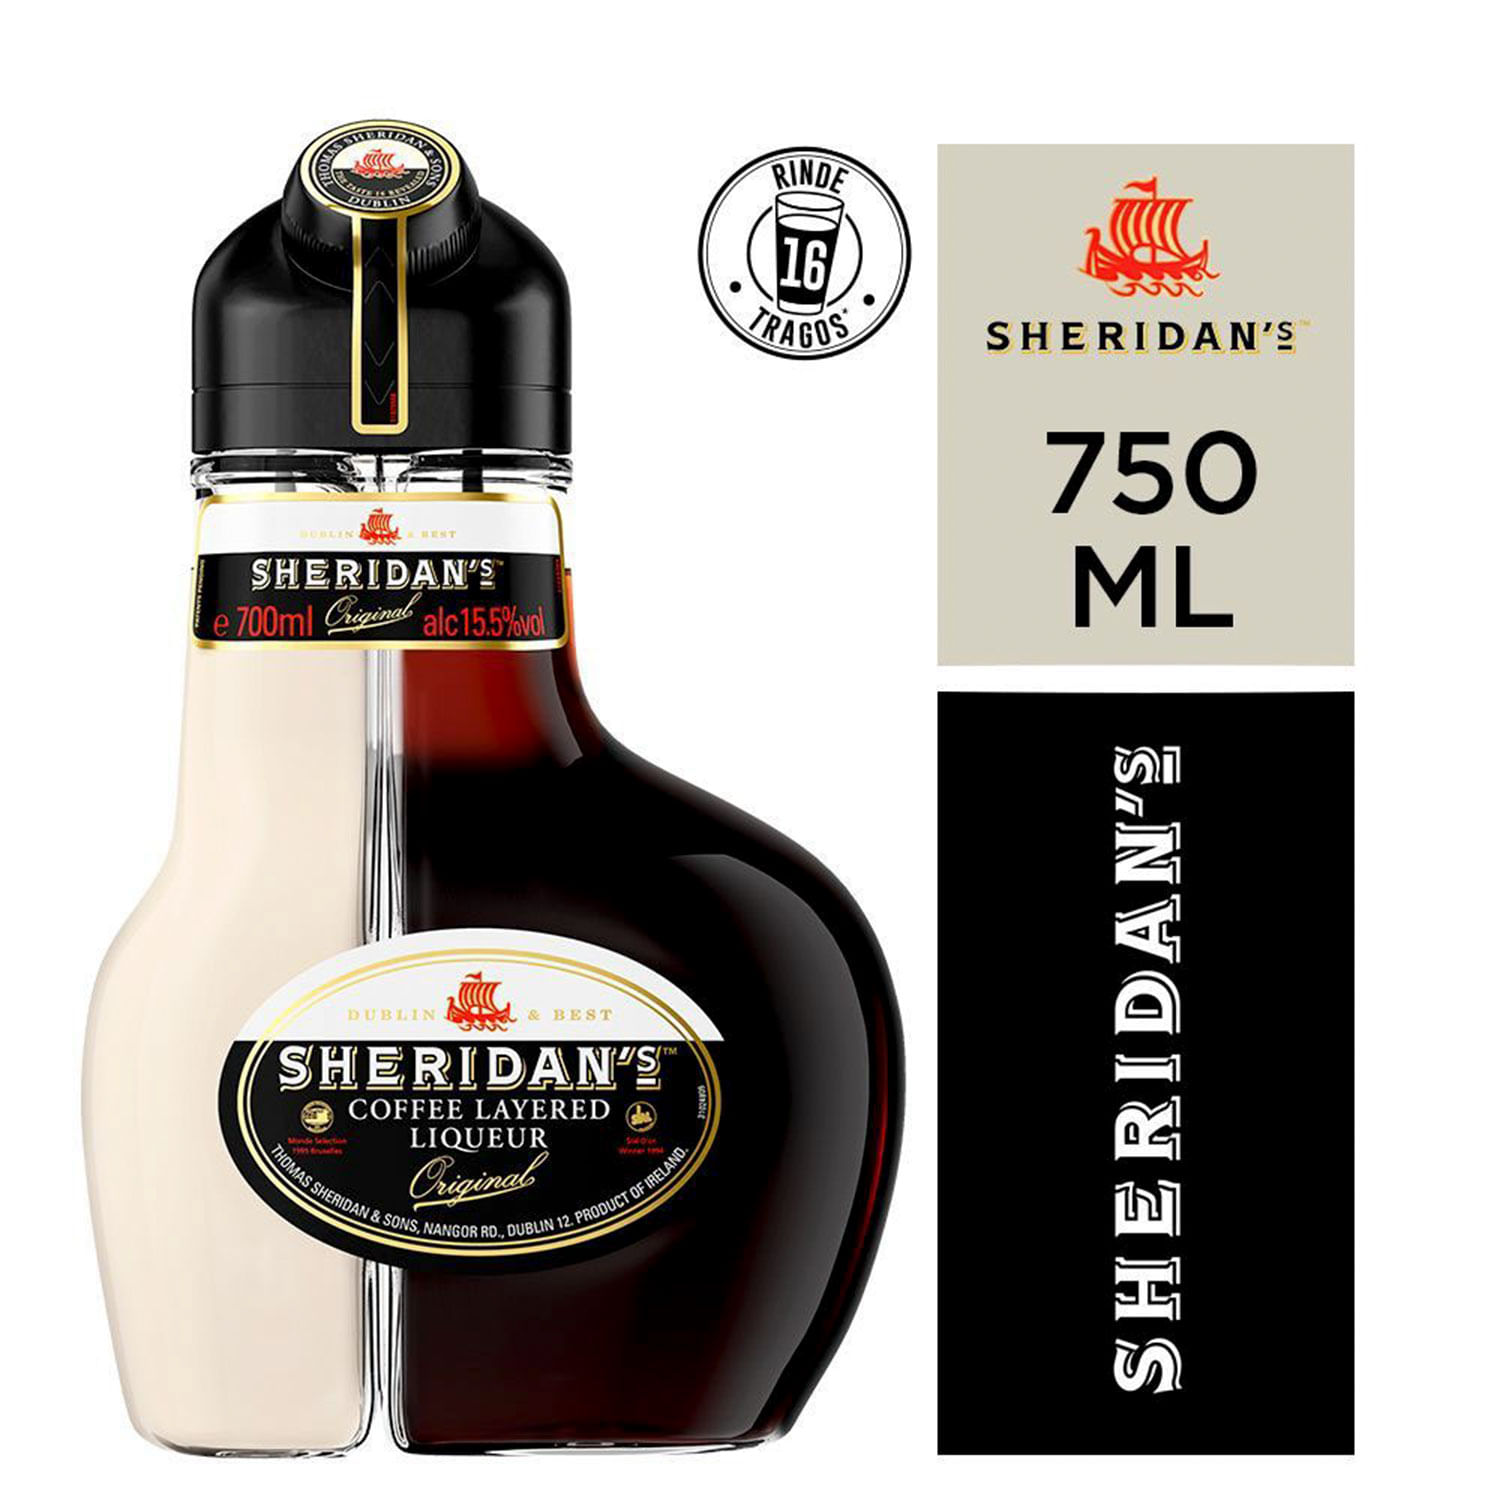 Licor crema Sheridan's 750 ml 15.5°, sheridan's liqueur de café